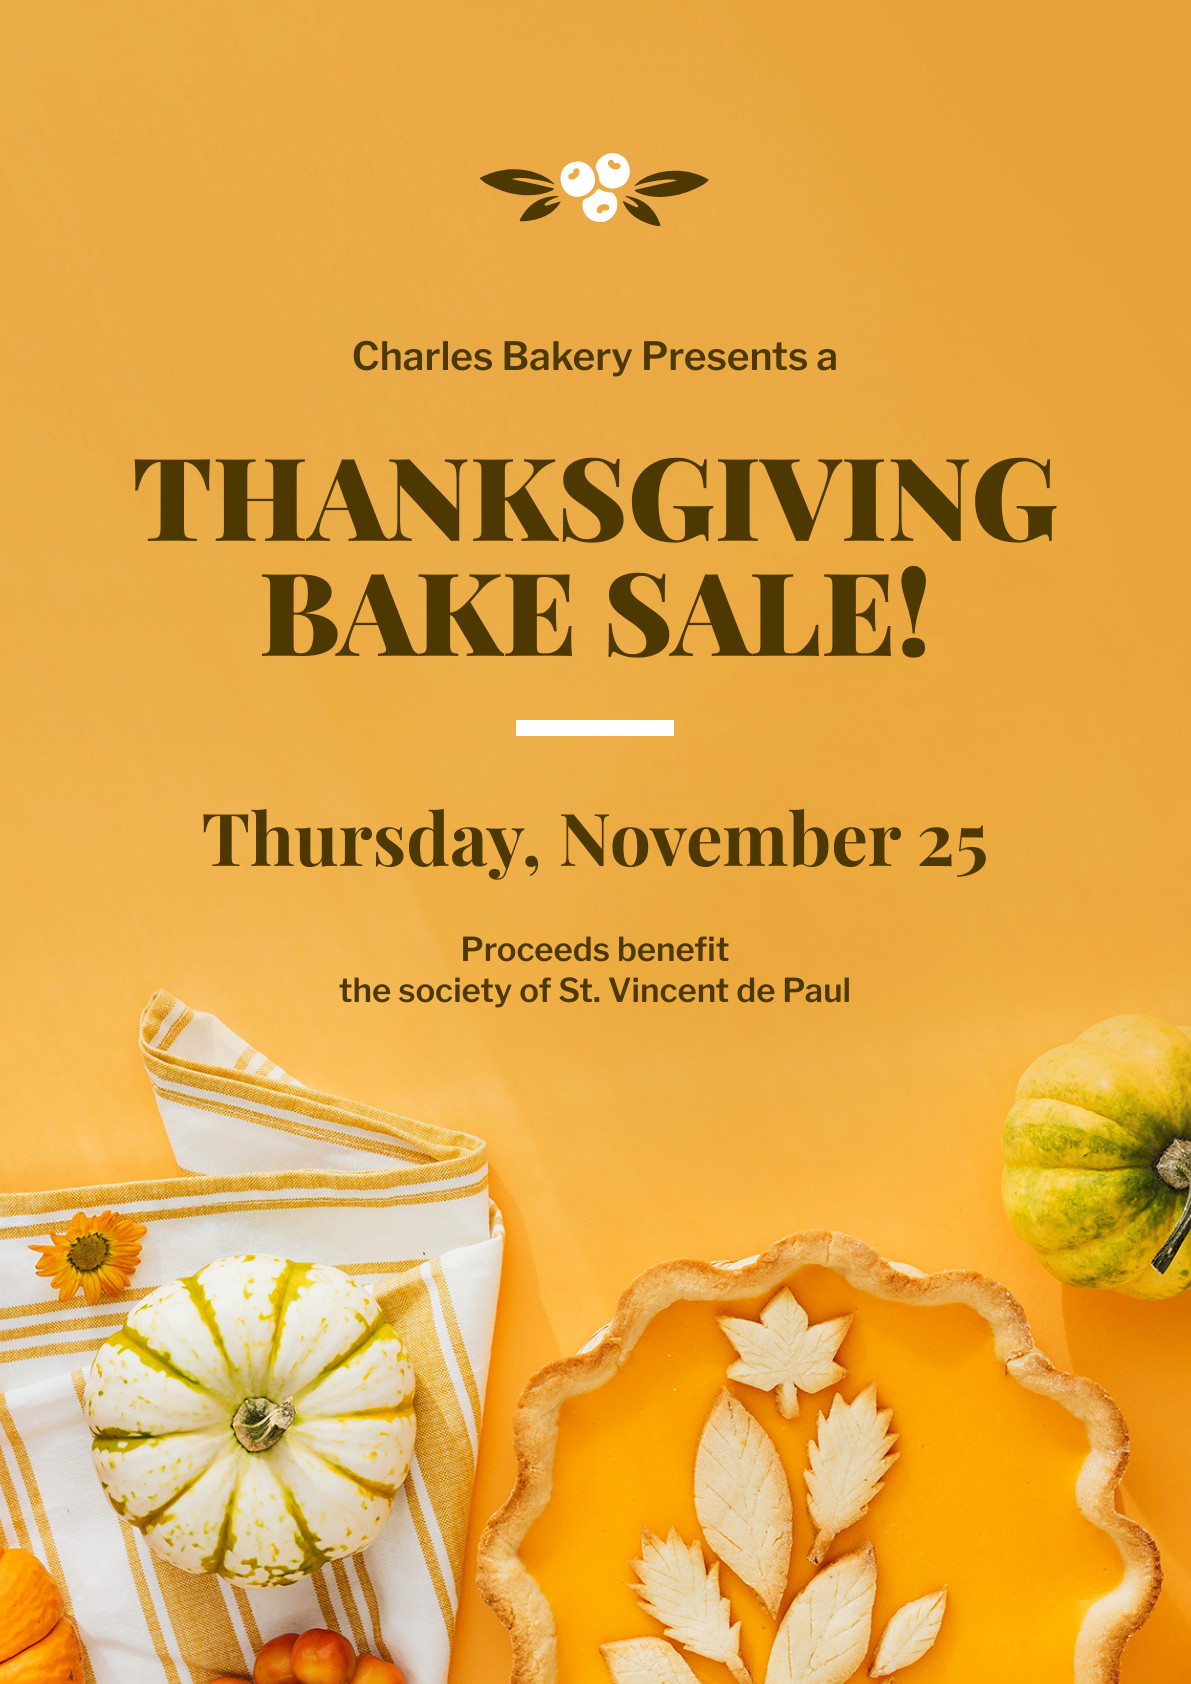 Thanksgiving Charles Bake Sale Poster 1191x1684